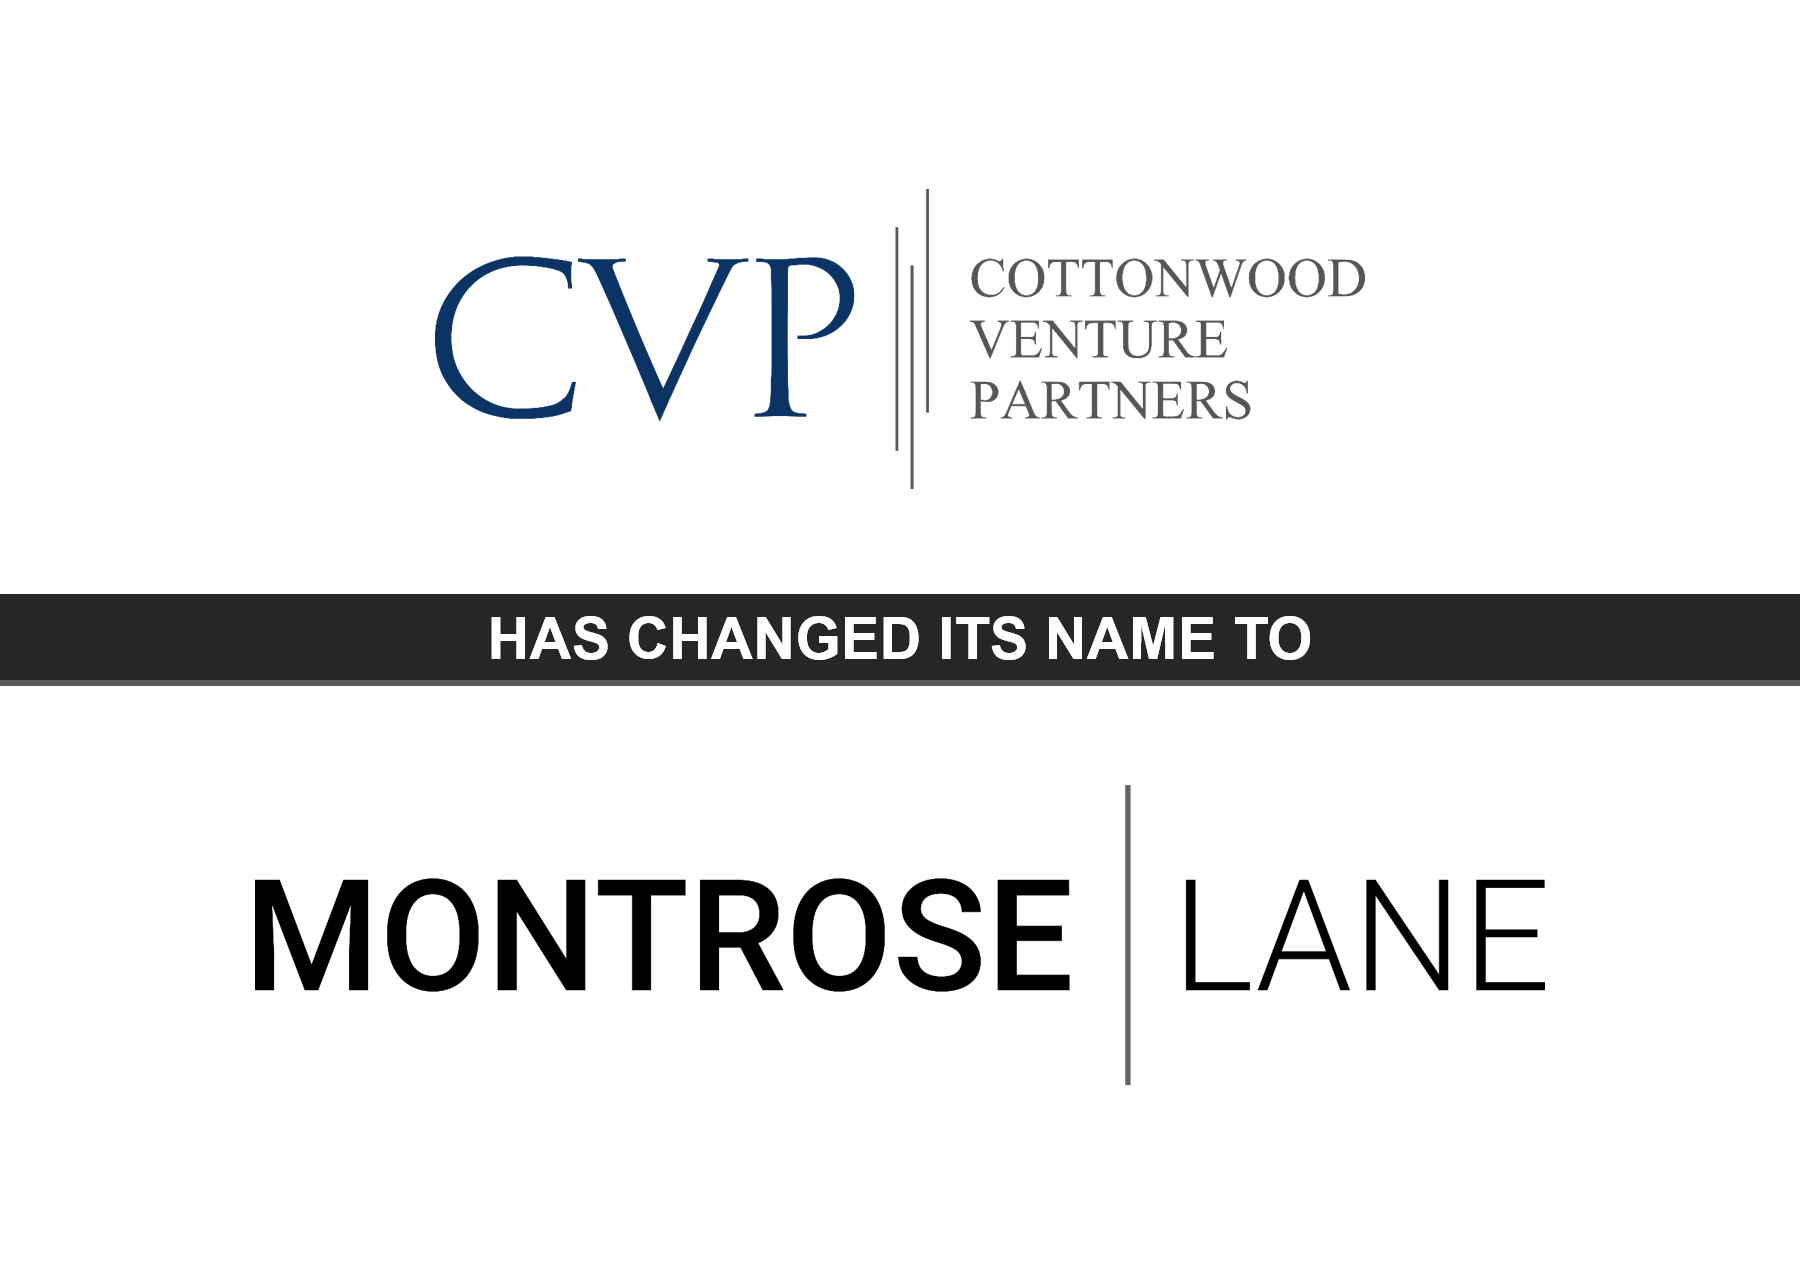 Cottonwood Venture Partners is now Montrose Lane